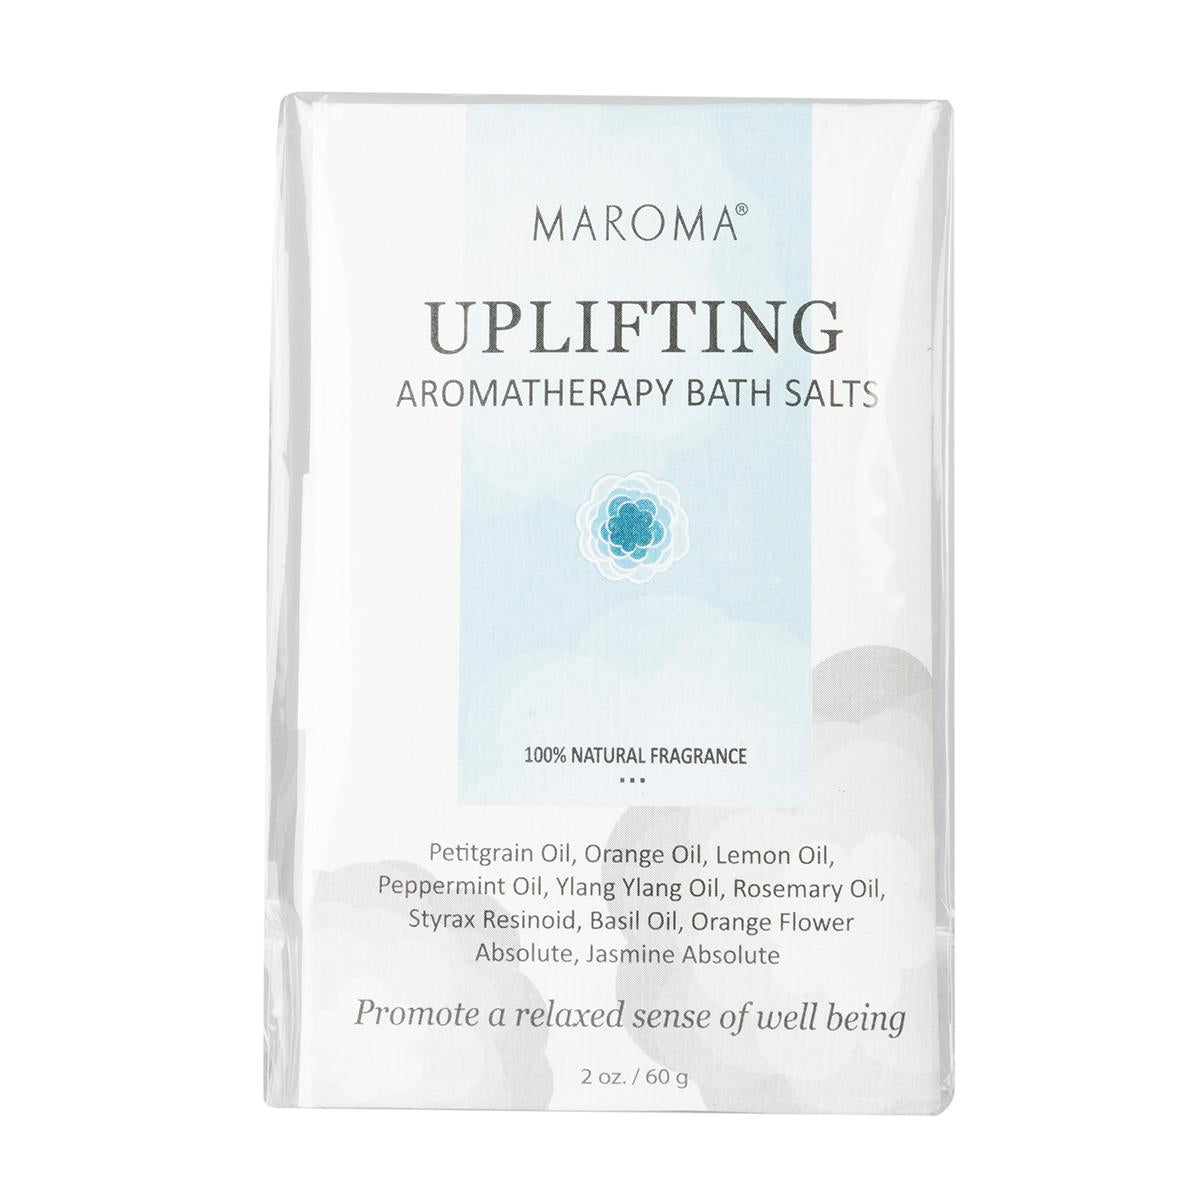 Primary image of Uplifting Aromatherapy Bath Salts